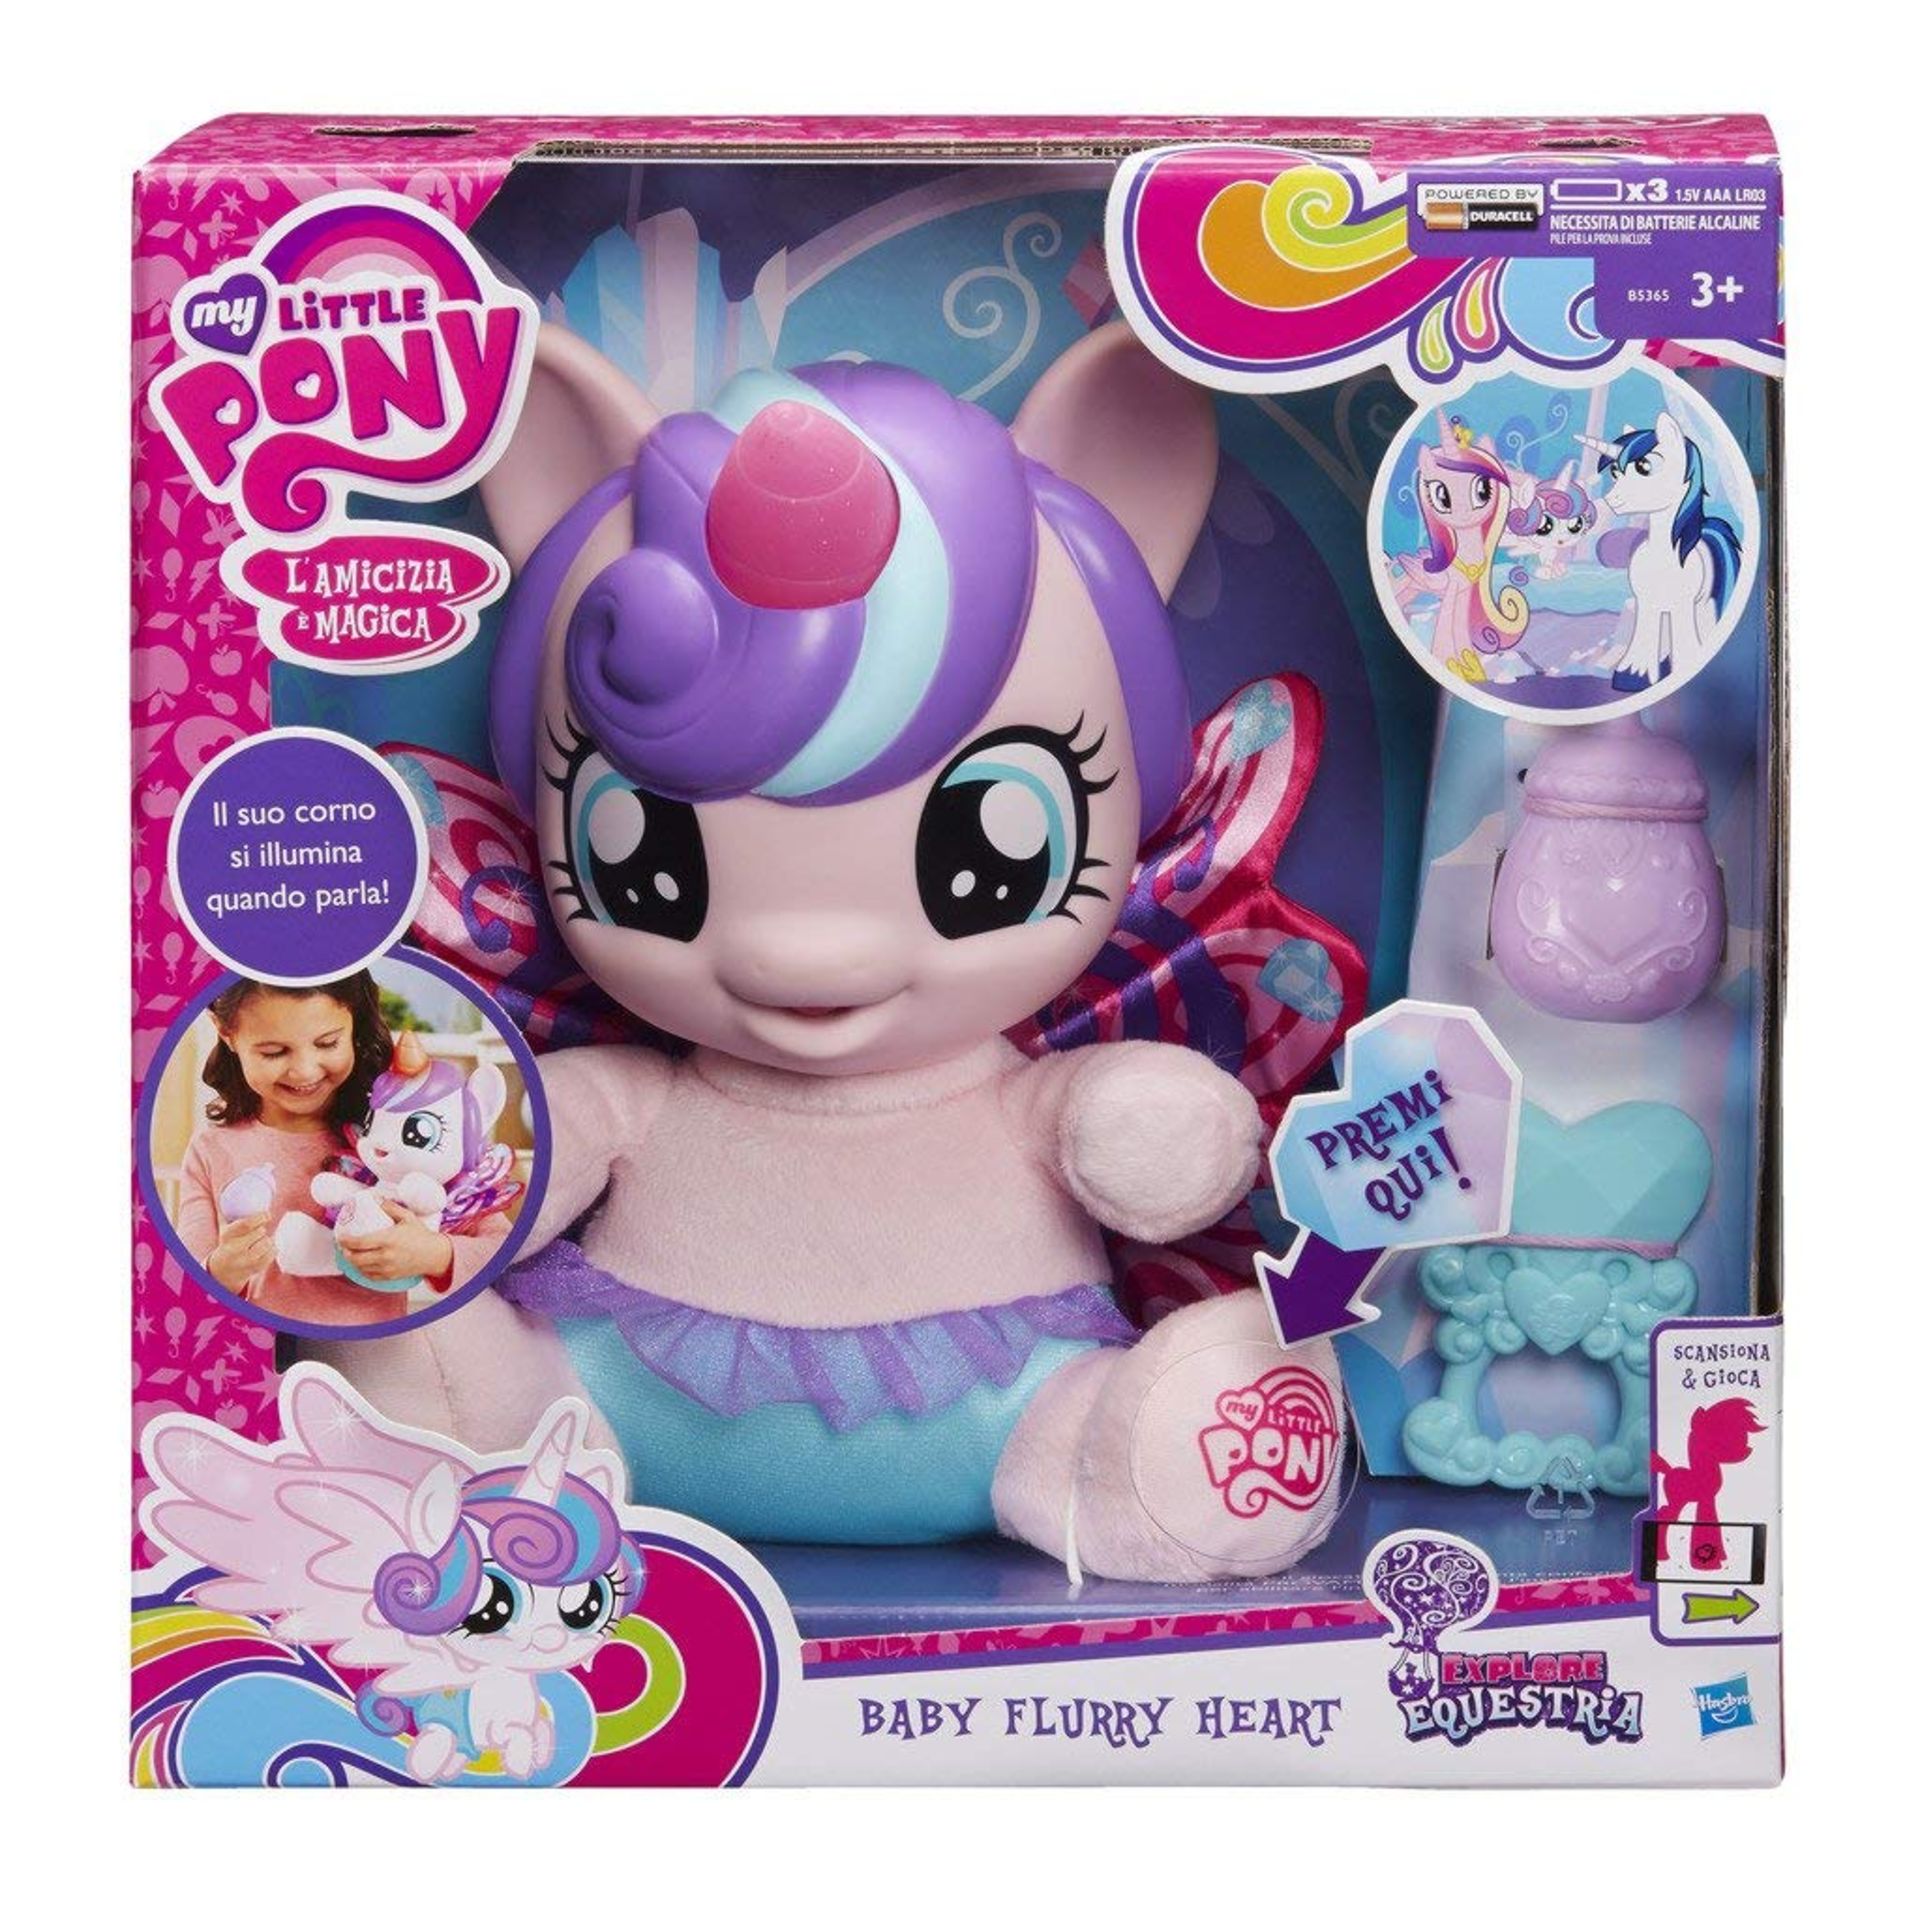 45 X My Little Pony Friendship is Magic Princess Doll Baby Flurry Heart RRP £710.1